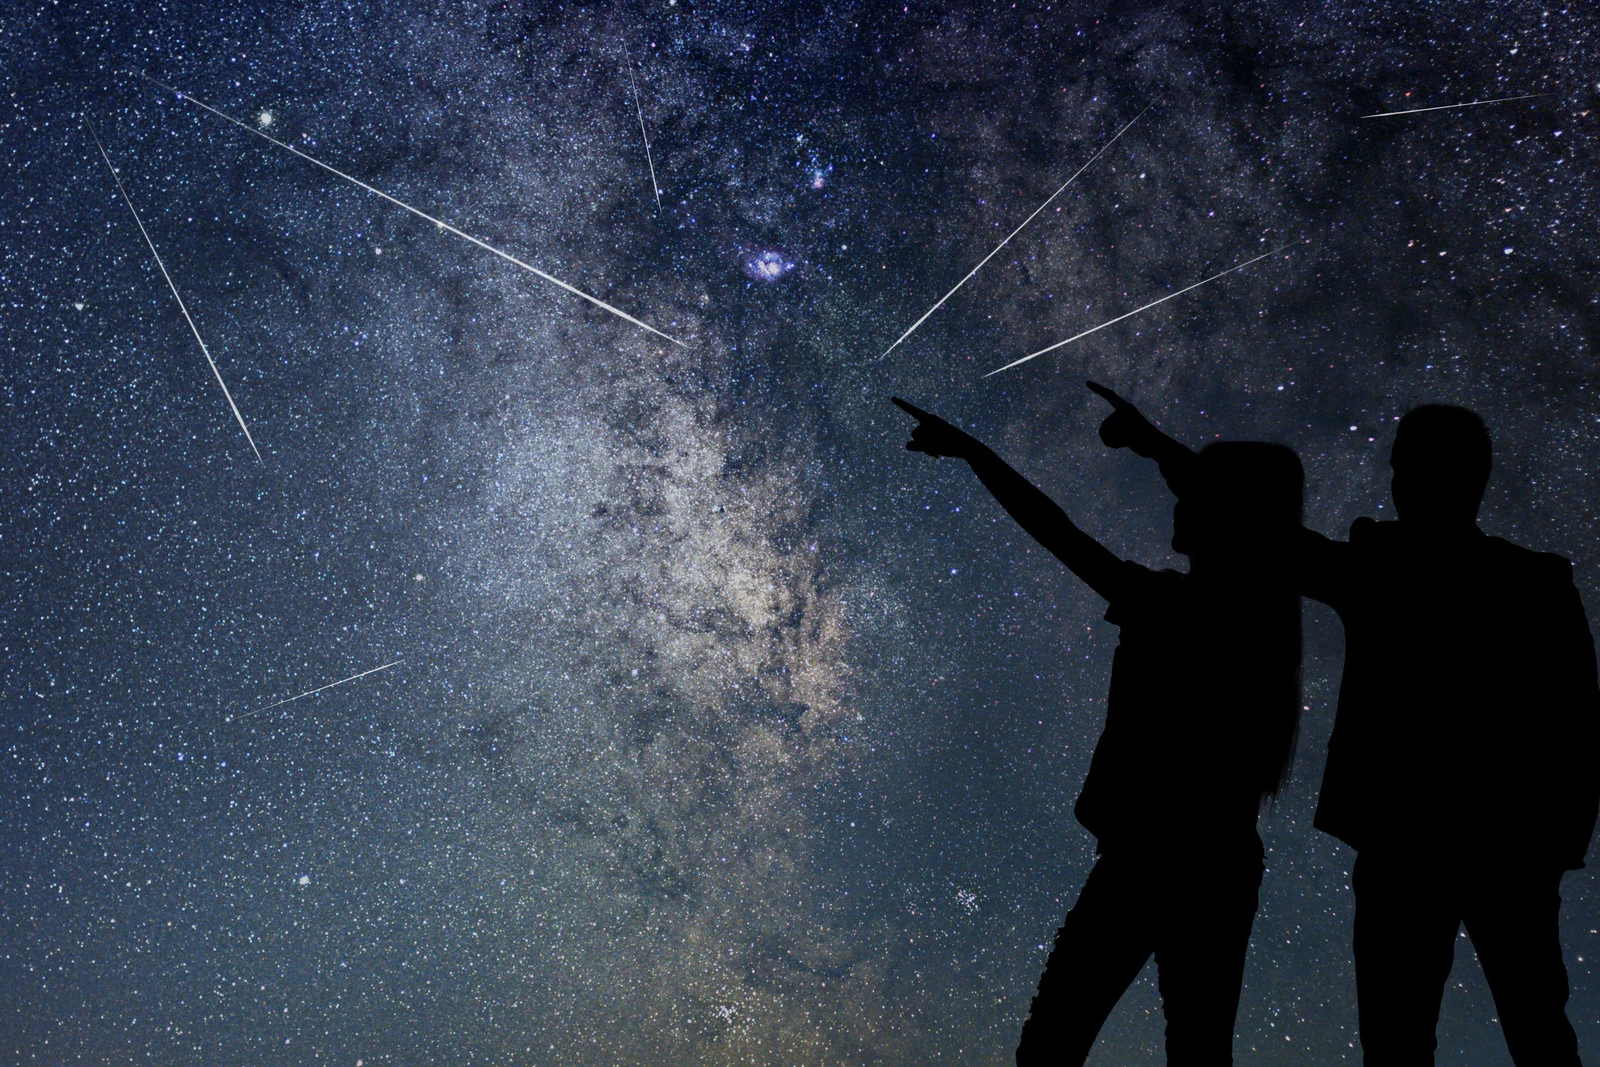 Perseid Meteor Shower Is Back For 2020 - The Peak Is Tonight